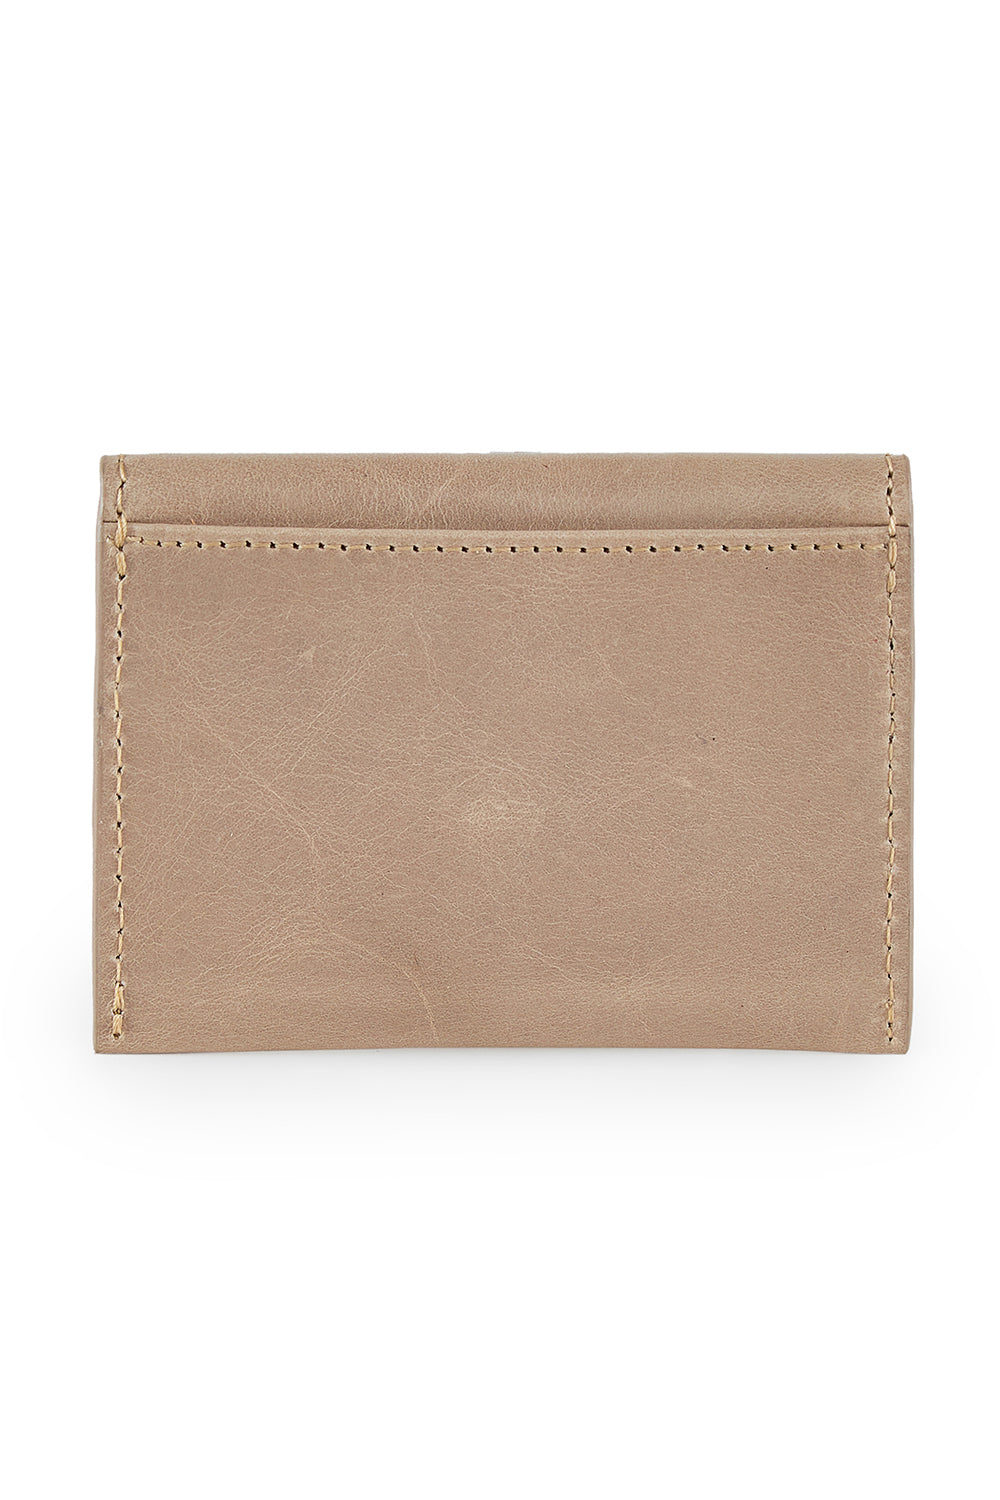 Shop Jojo Palm Desert Glazed Leather Wallet